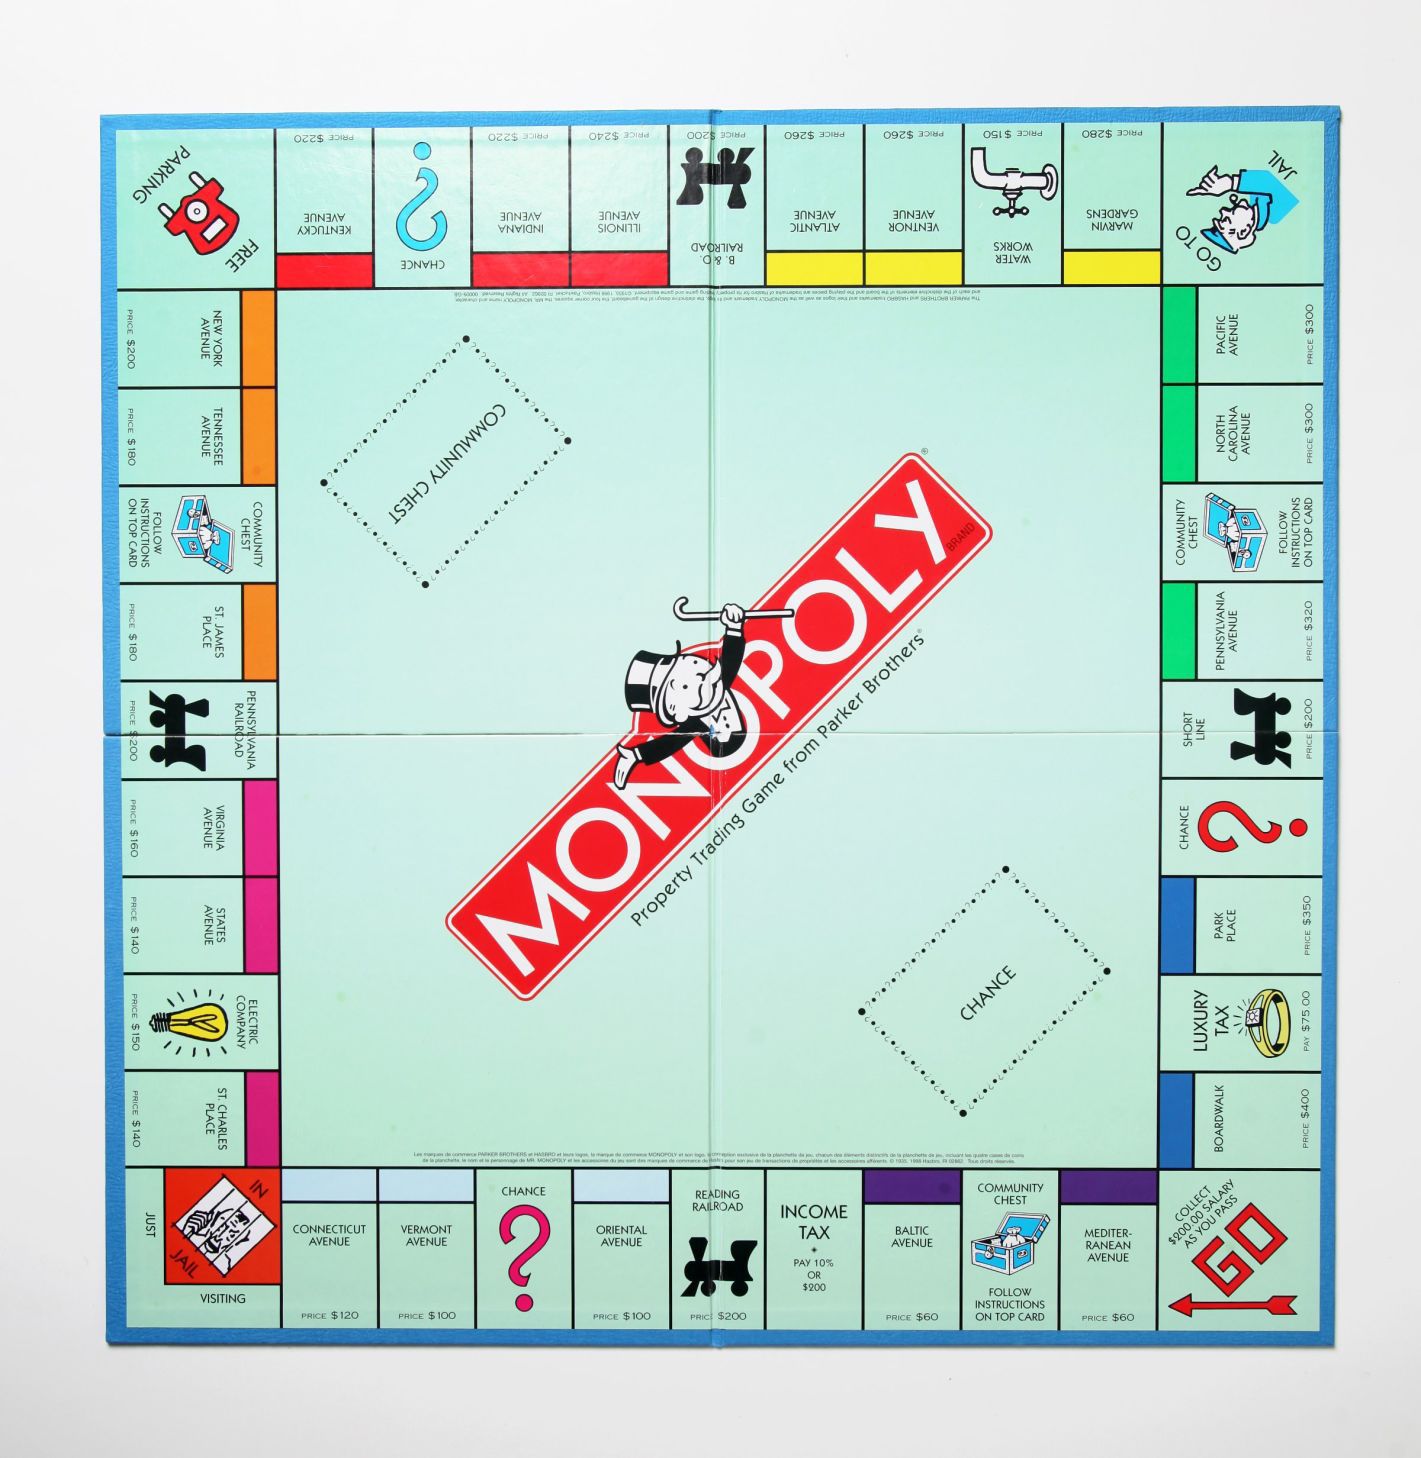 monopoly board original